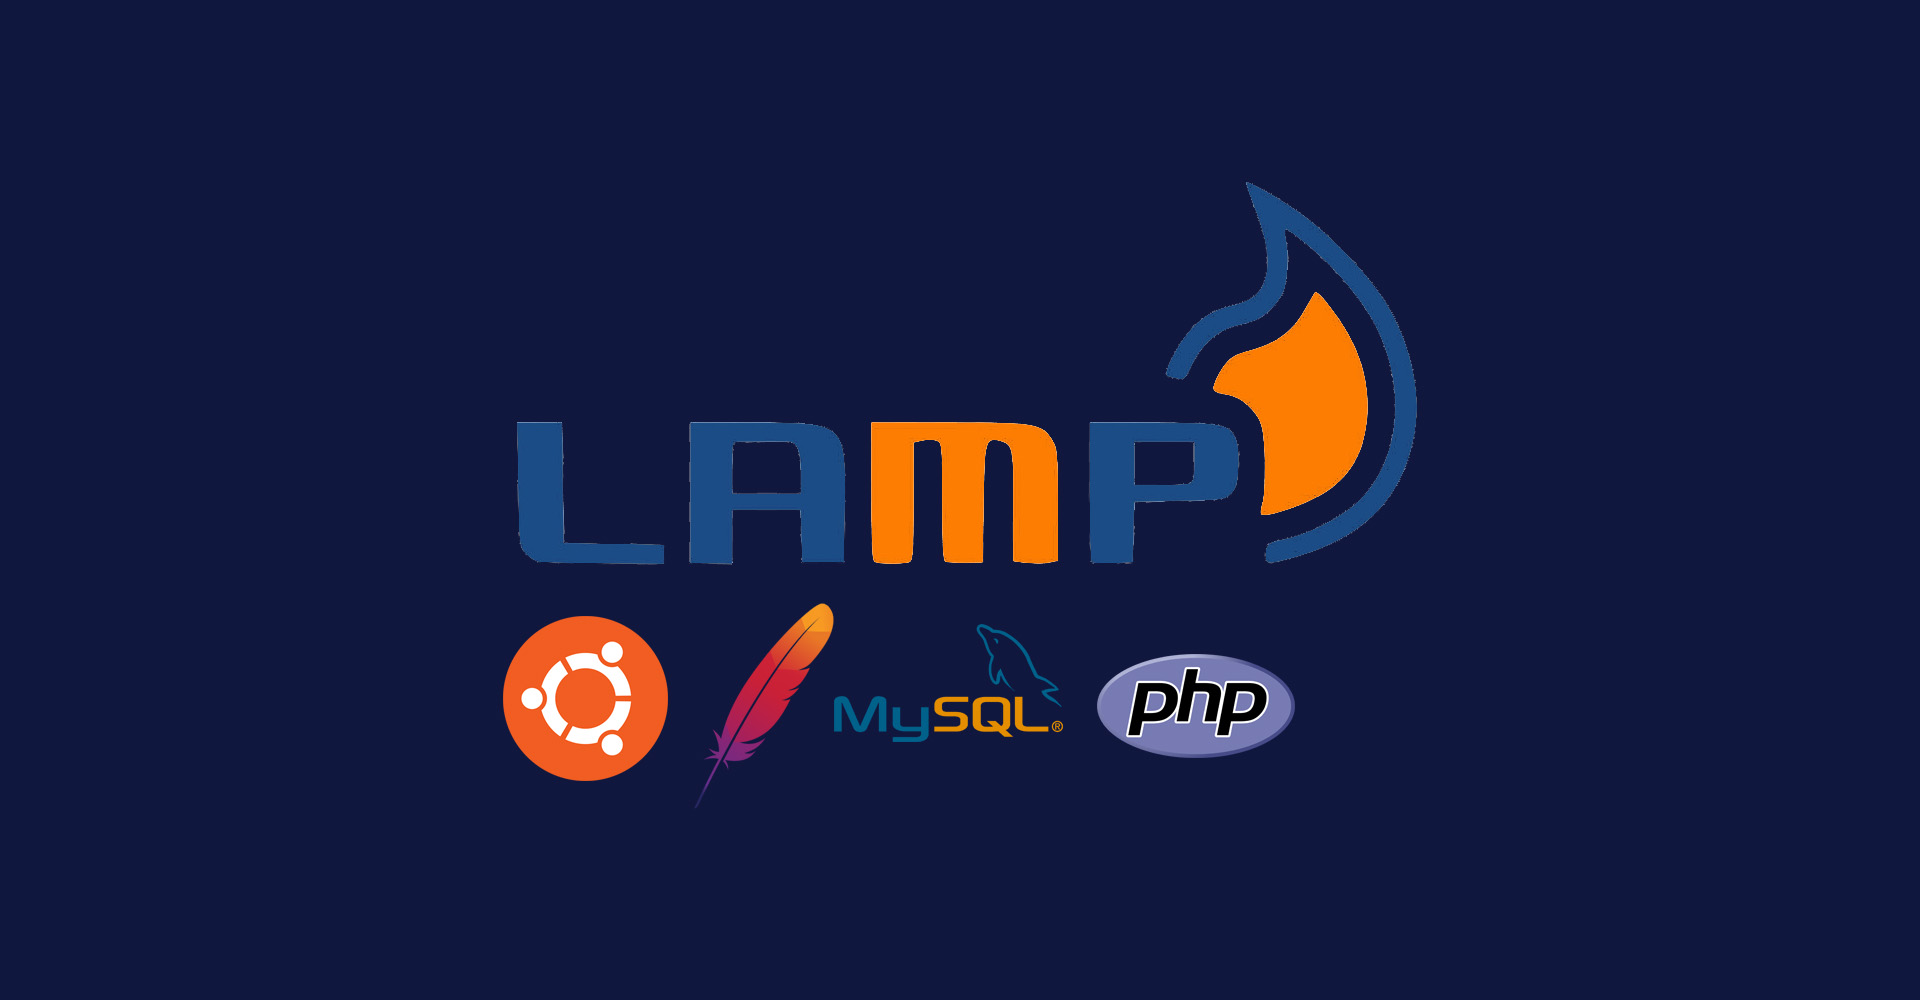 The Complete Guide To Install LAMP Server(Ubuntu, Apache, MySQL, PHP) Using Ubuntu 20.04 LTS